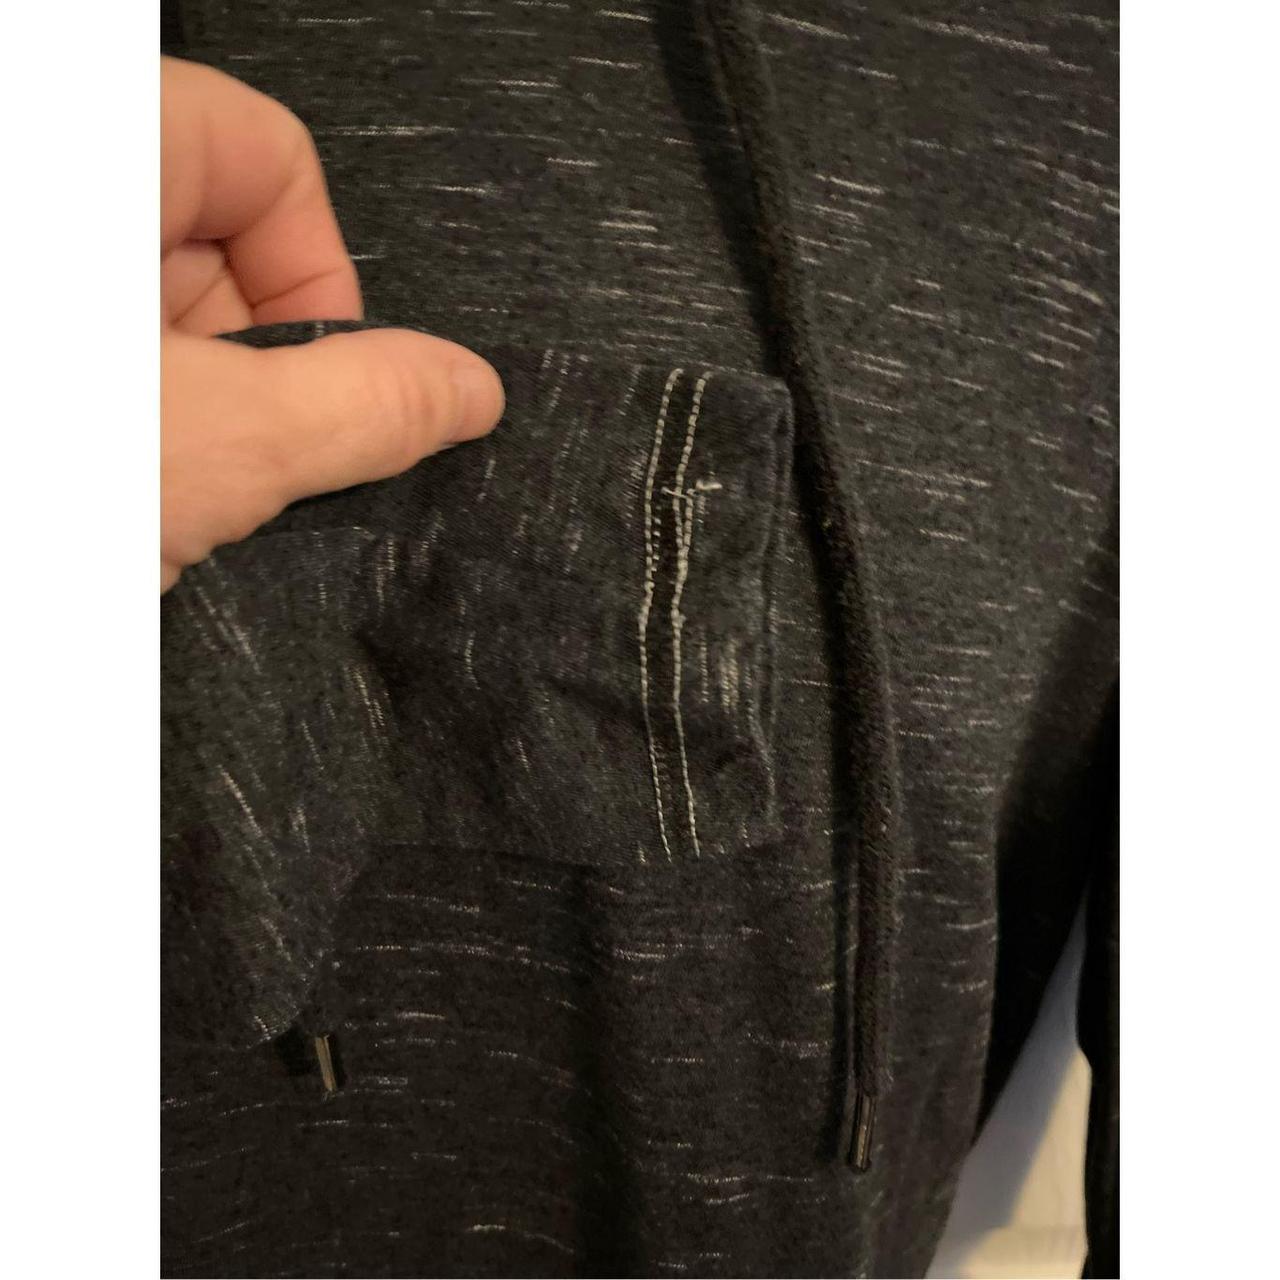 Tripalink brand black hoodie. 100% Cotton. Doesn't - Depop